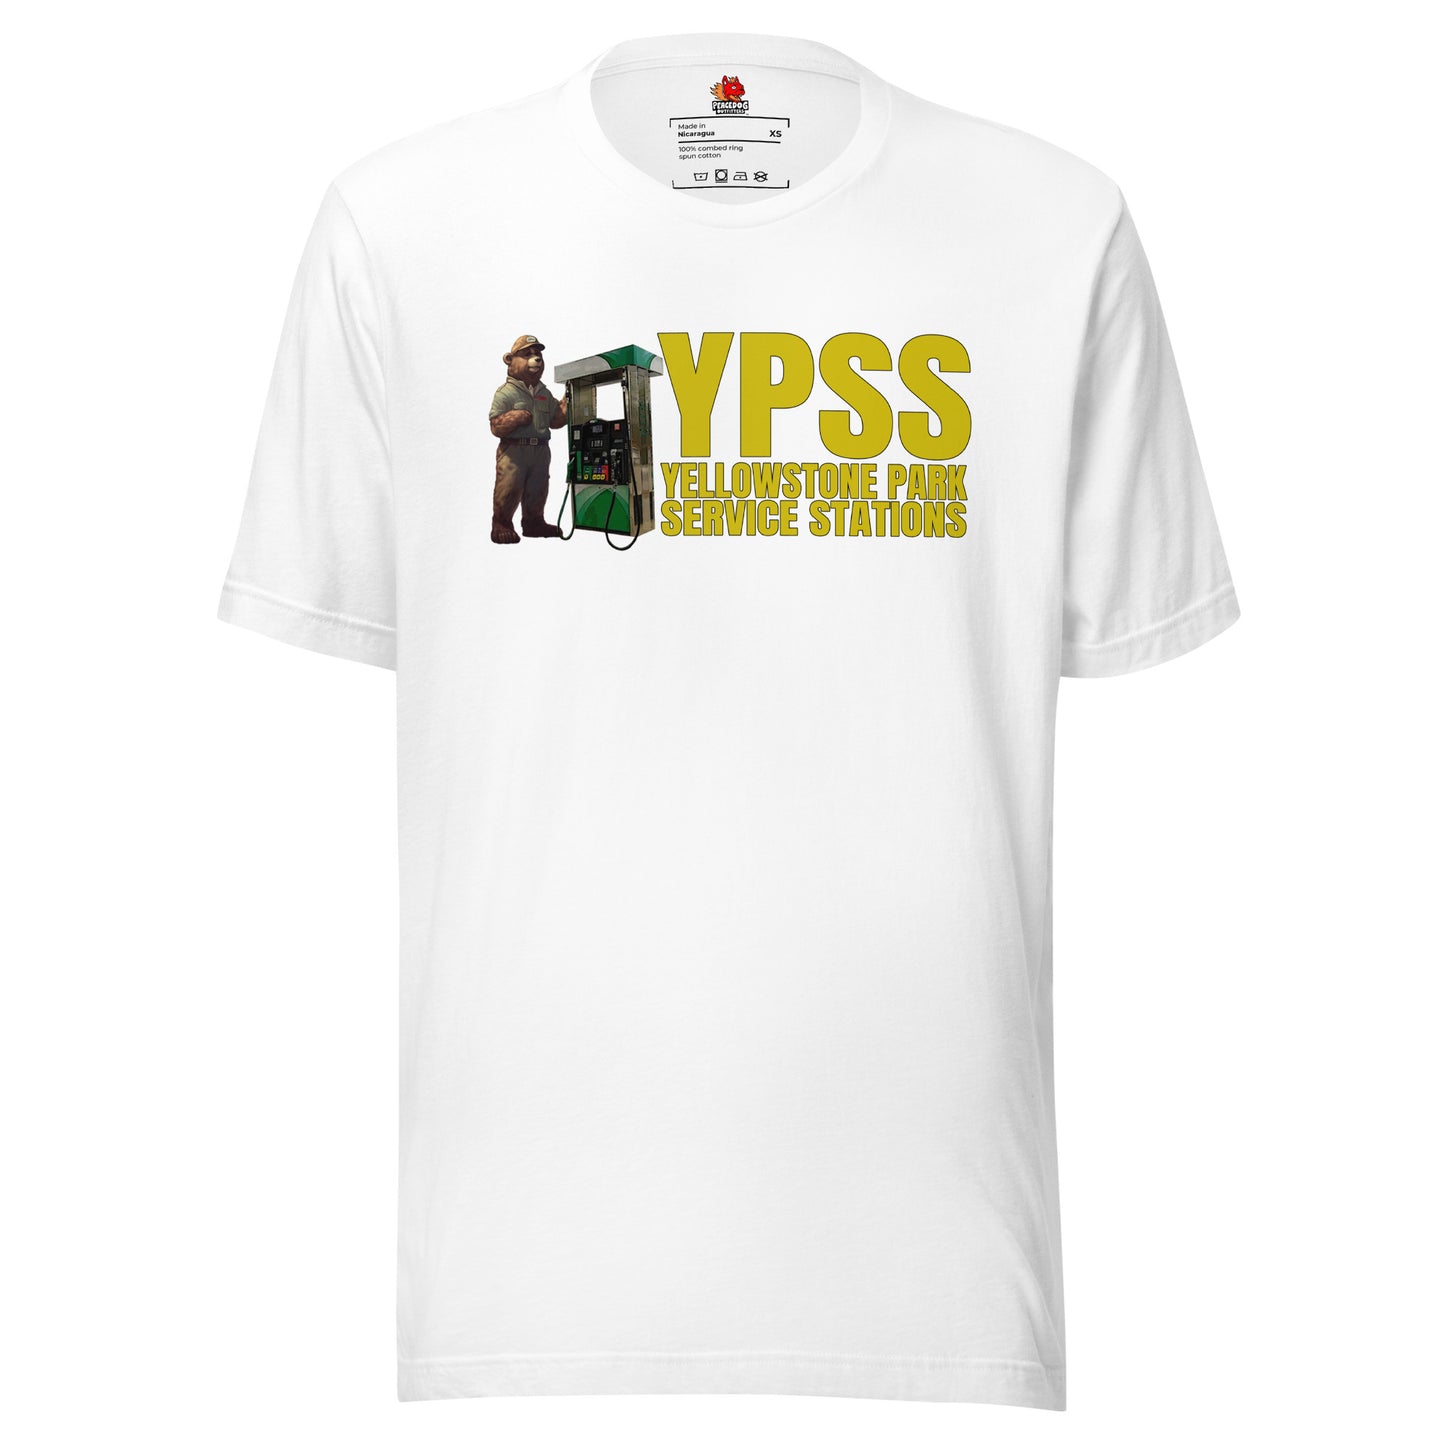 YPSS Yellowstone Park Service Stations T-shirt